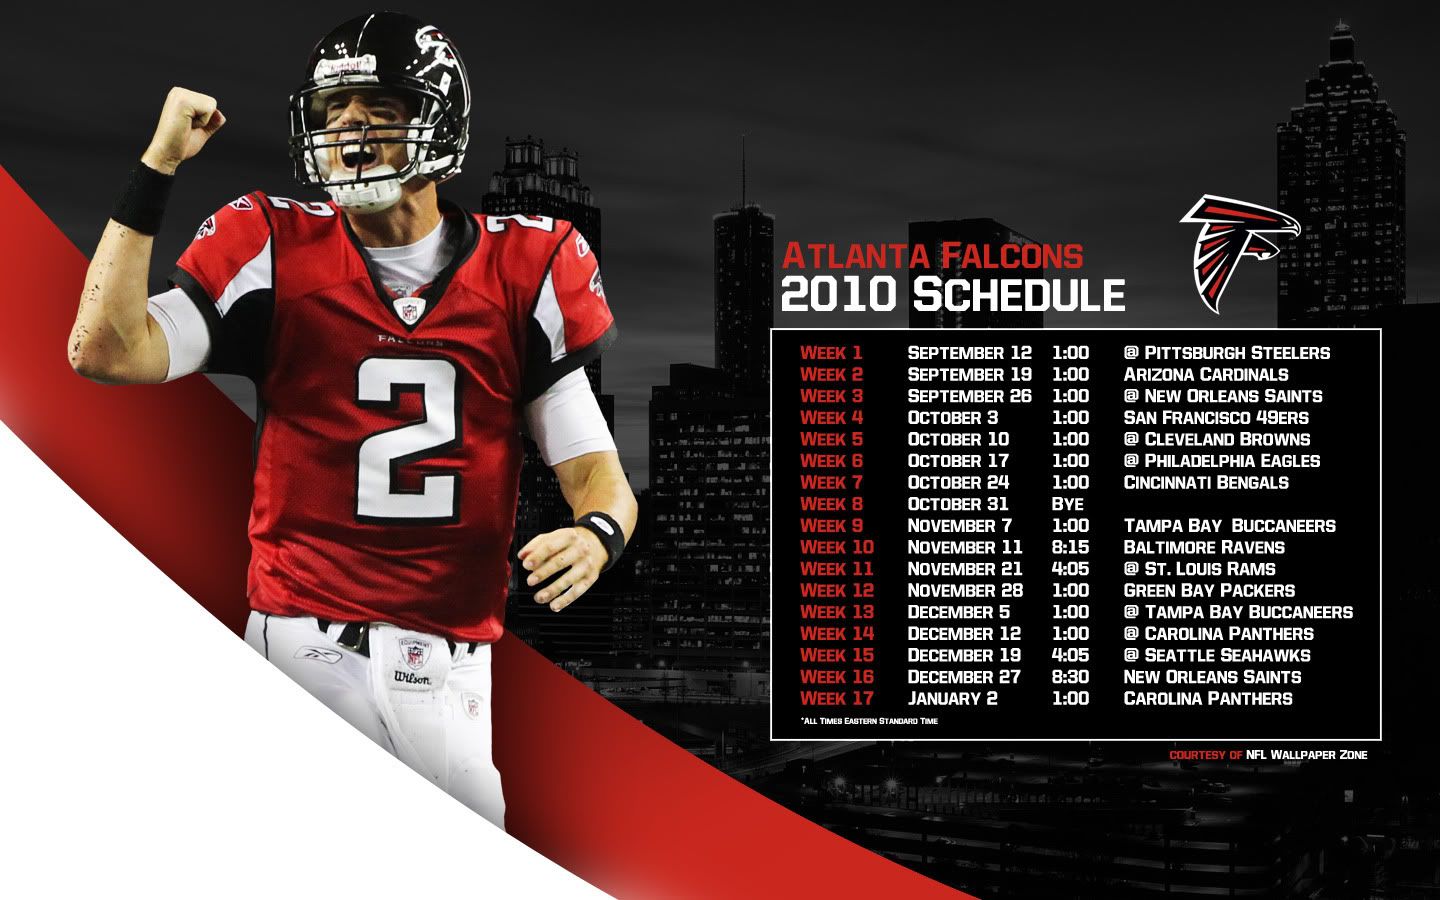 Falcons2010ScheduleWallpaper.jpg 2010 Atlanta Falcons Schedule Wallpaper